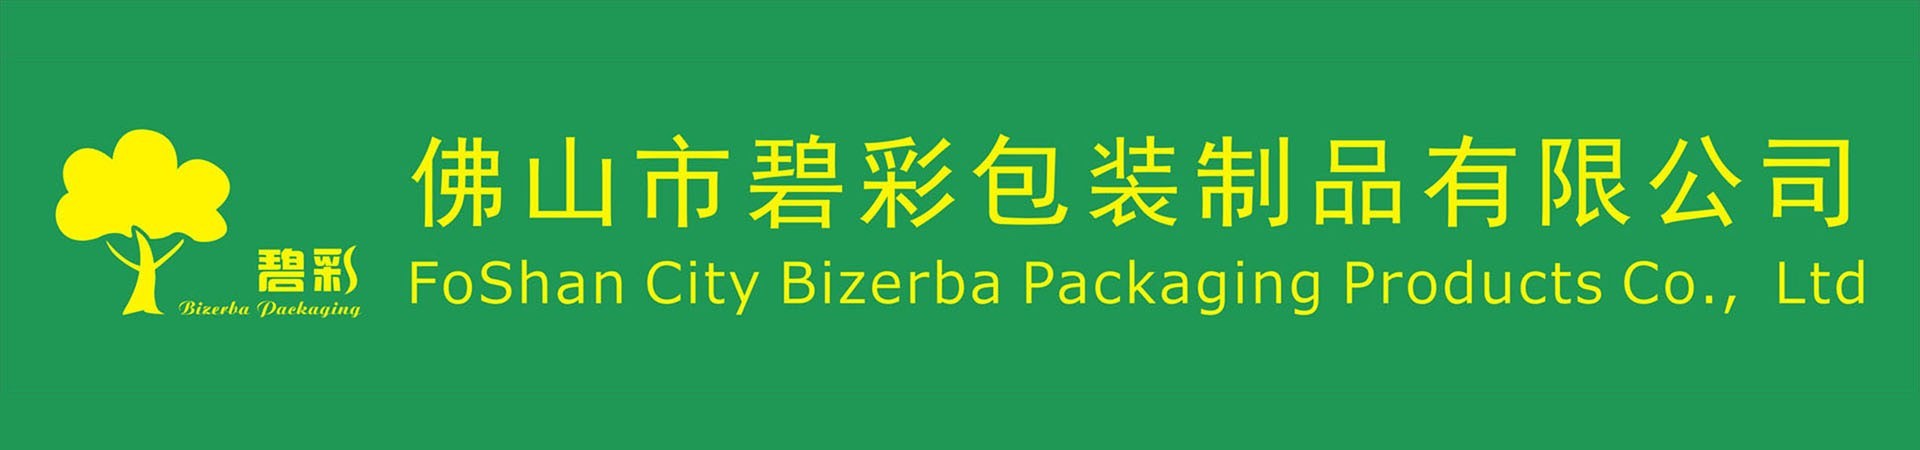 FoShan City Bizerba Packaging Products Co.,Ltd 